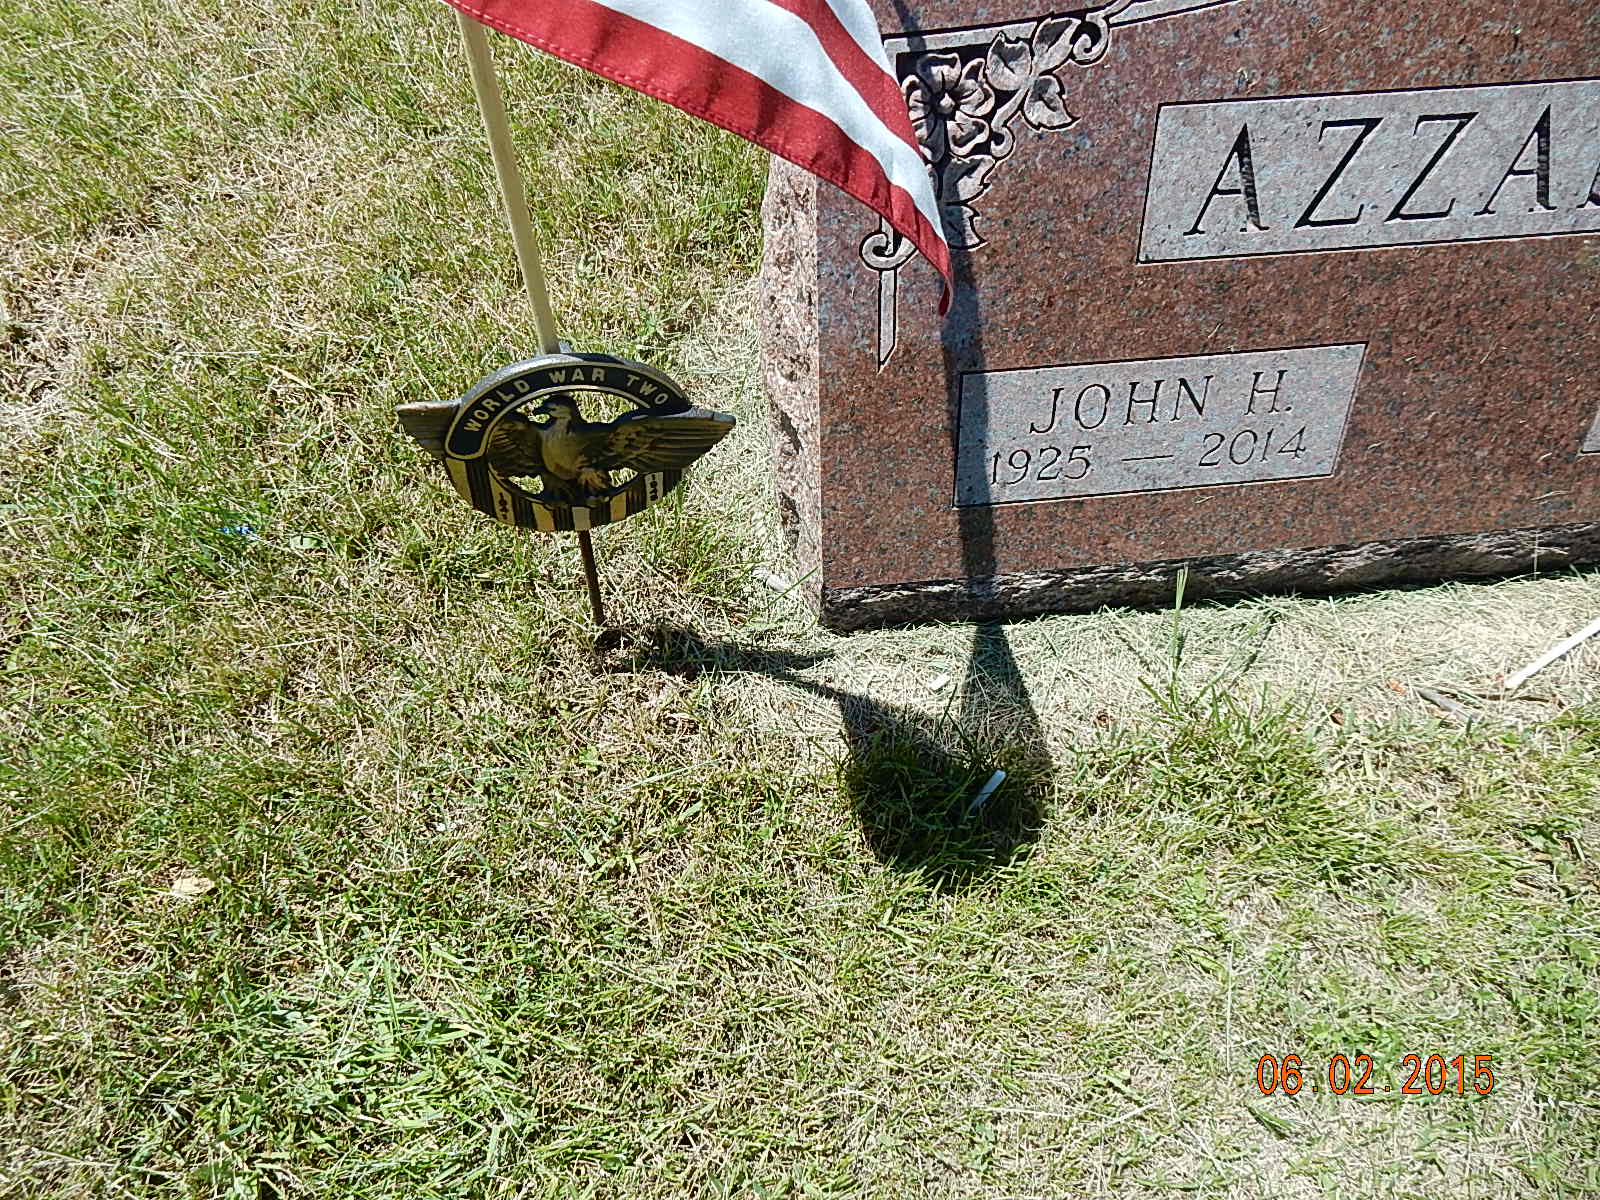 Azzalino, John H., WWII Flag Staff (2015)